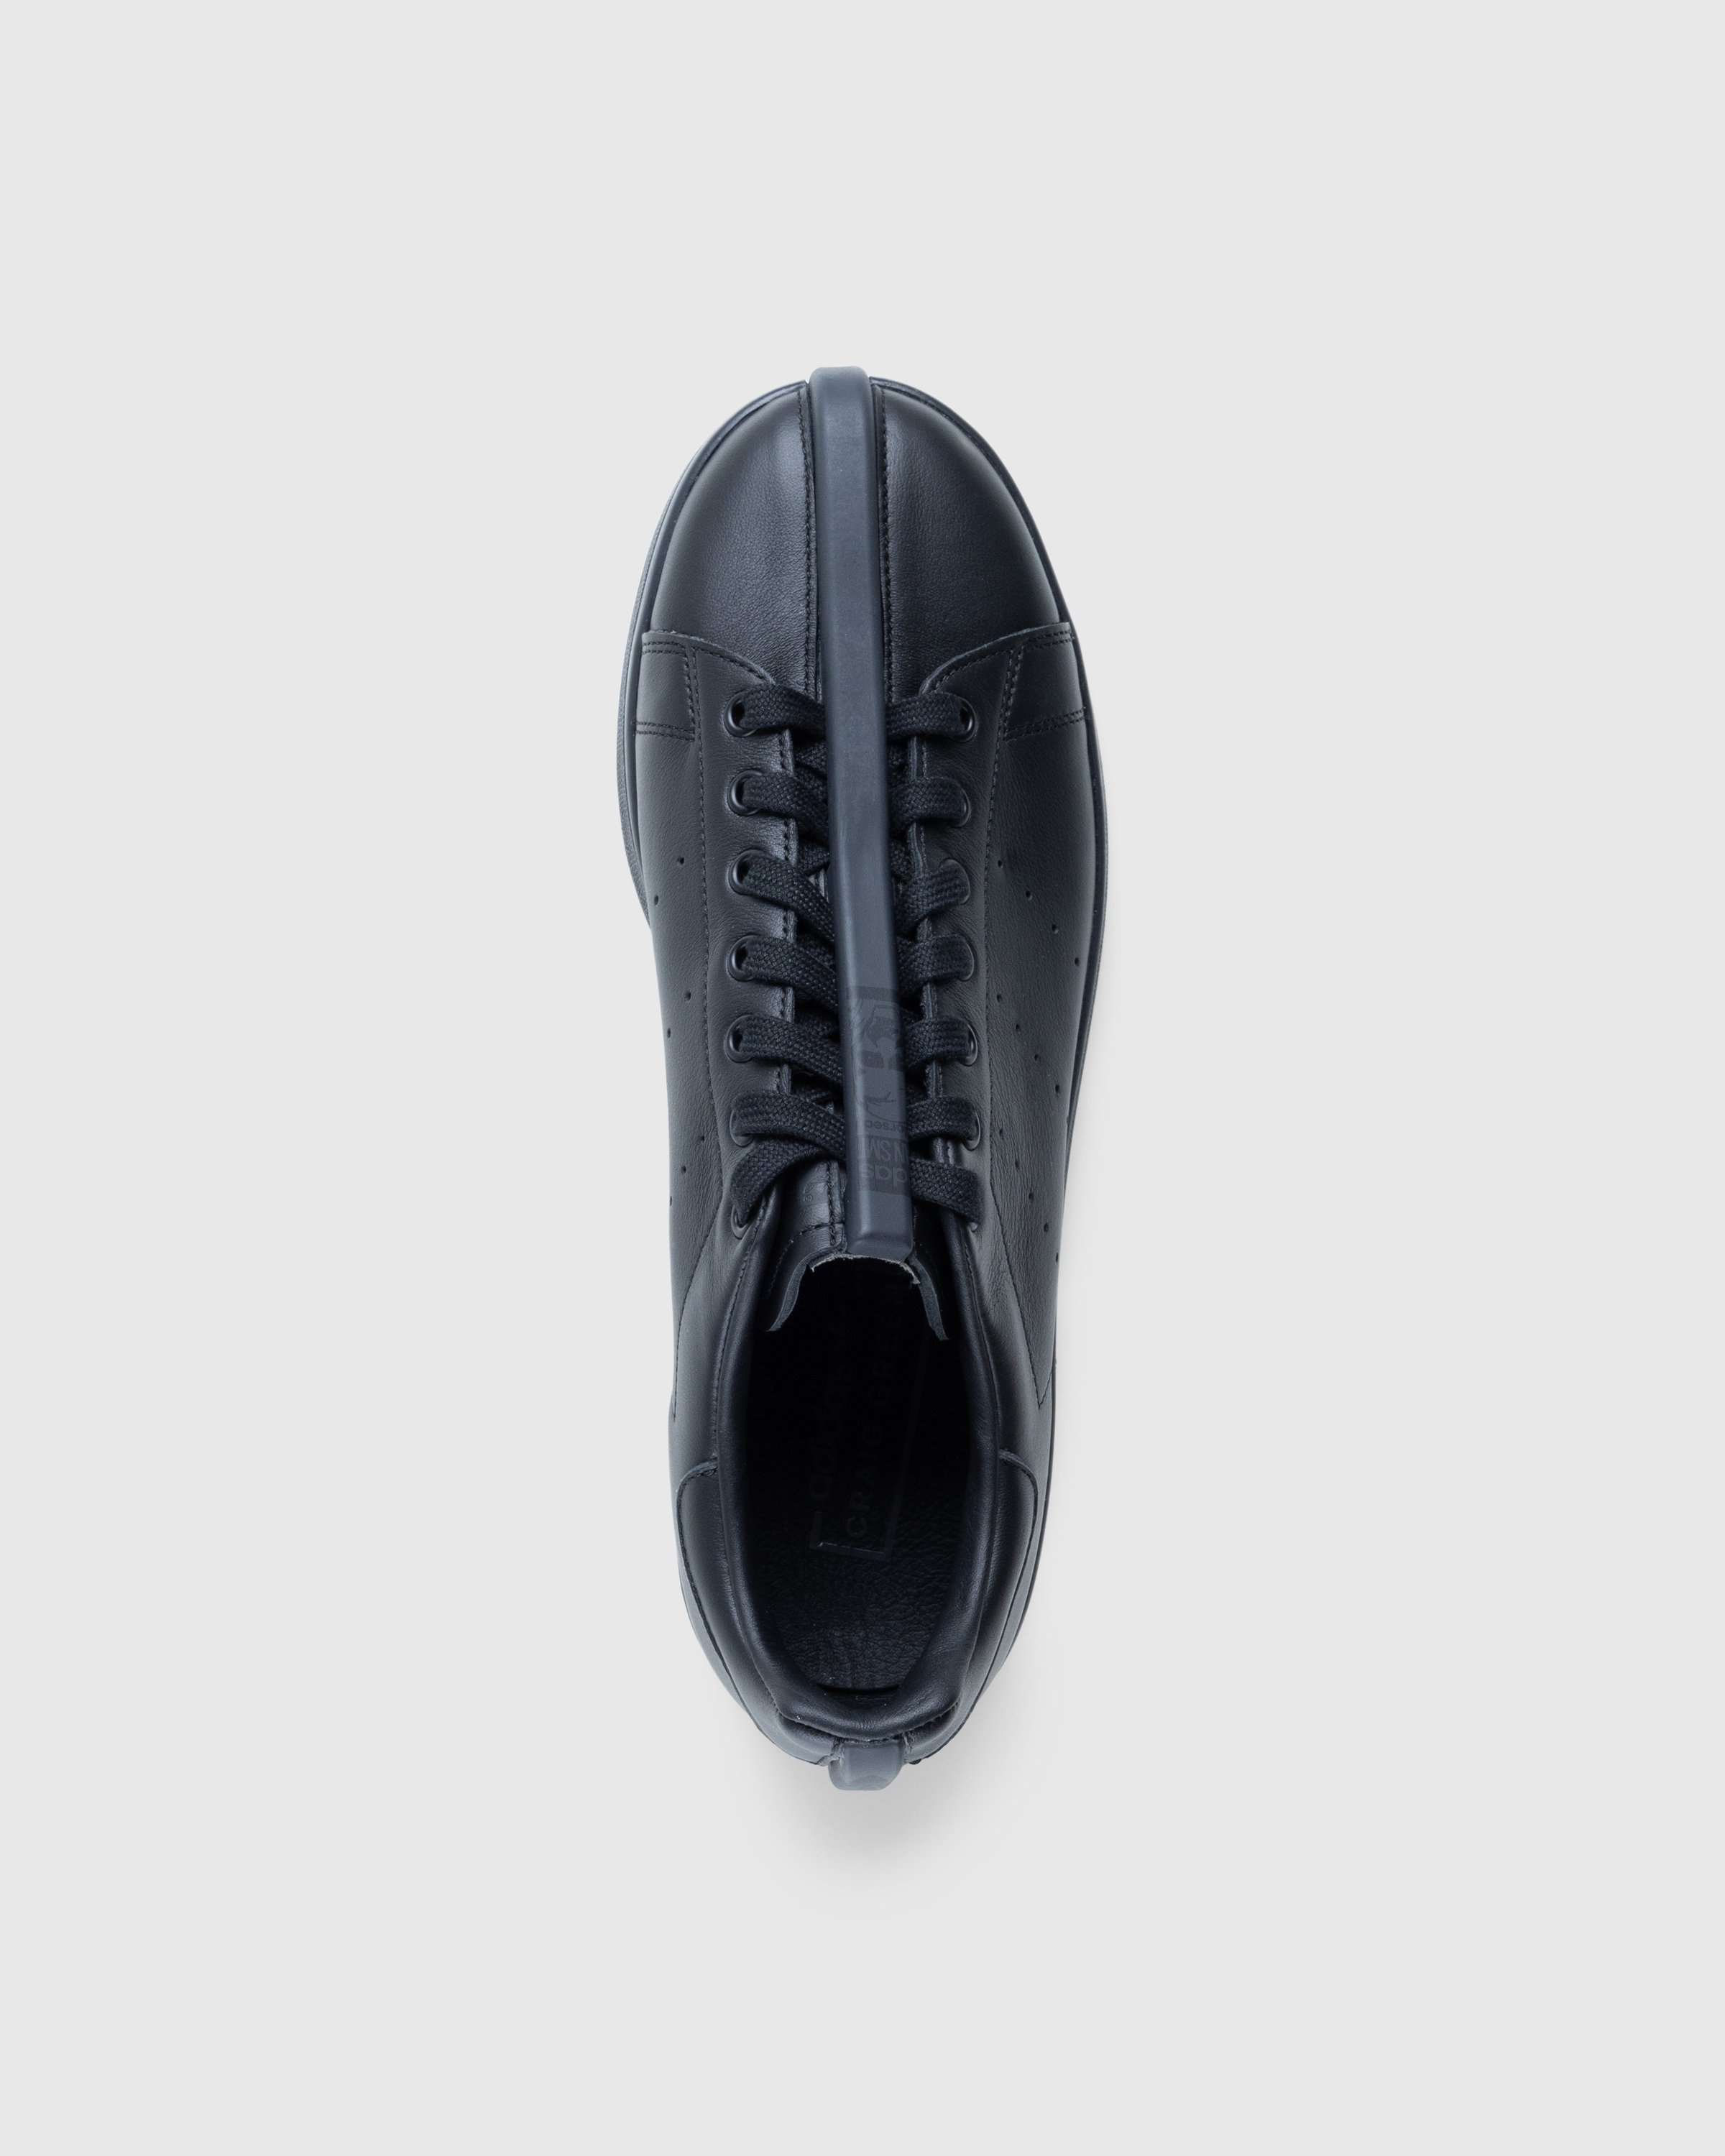 Craig Green x Adidas – CG Split Stan Smith Core Black/Granite - Sneakers - Black - Image 5